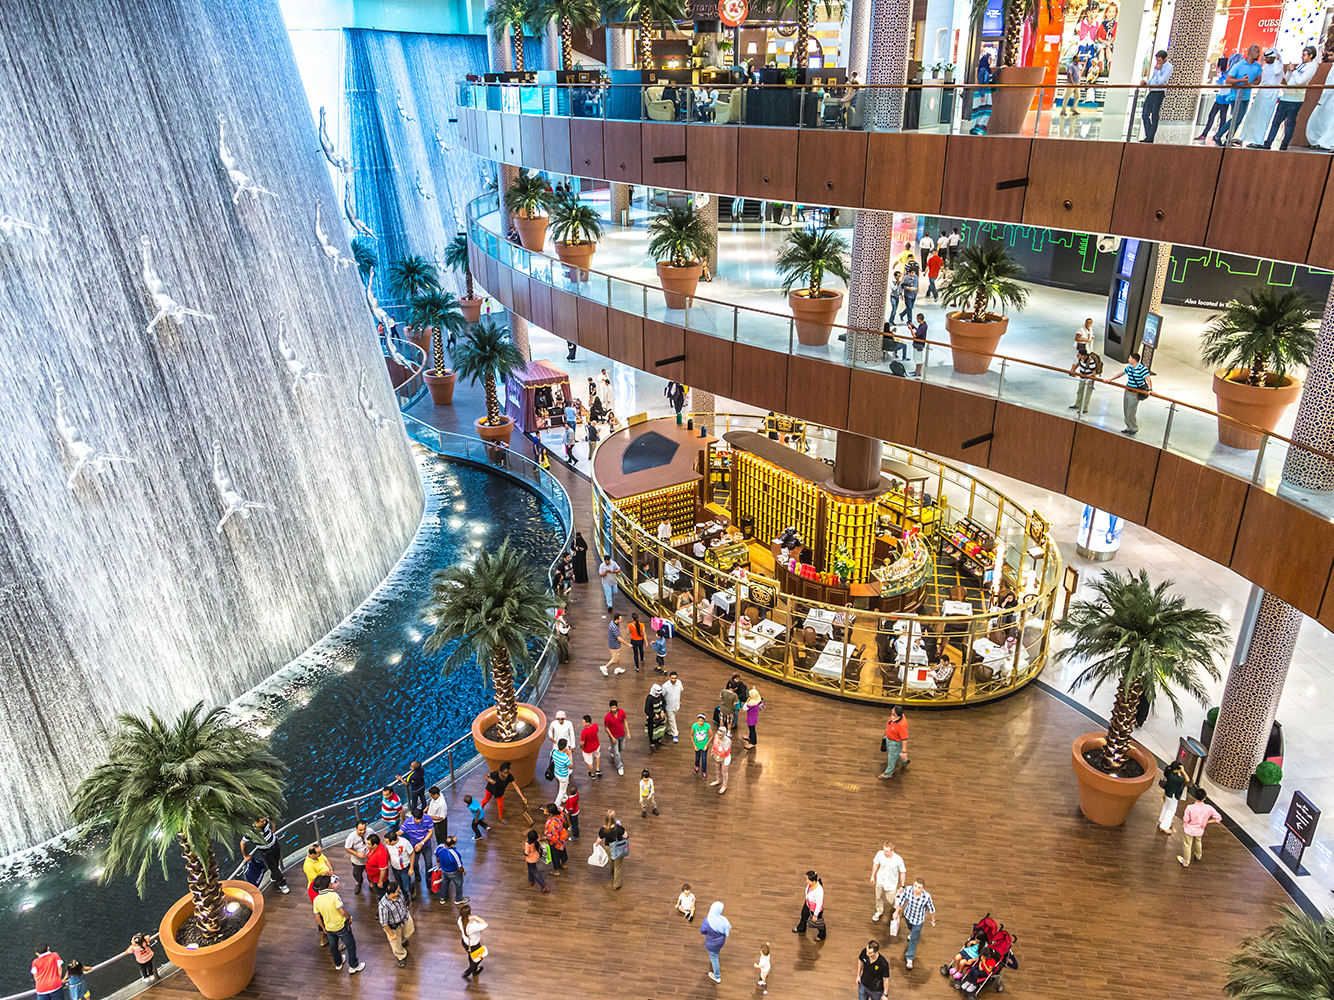 UAE Travel Guide for First Time Visitors - Dubai Mall, Dubai